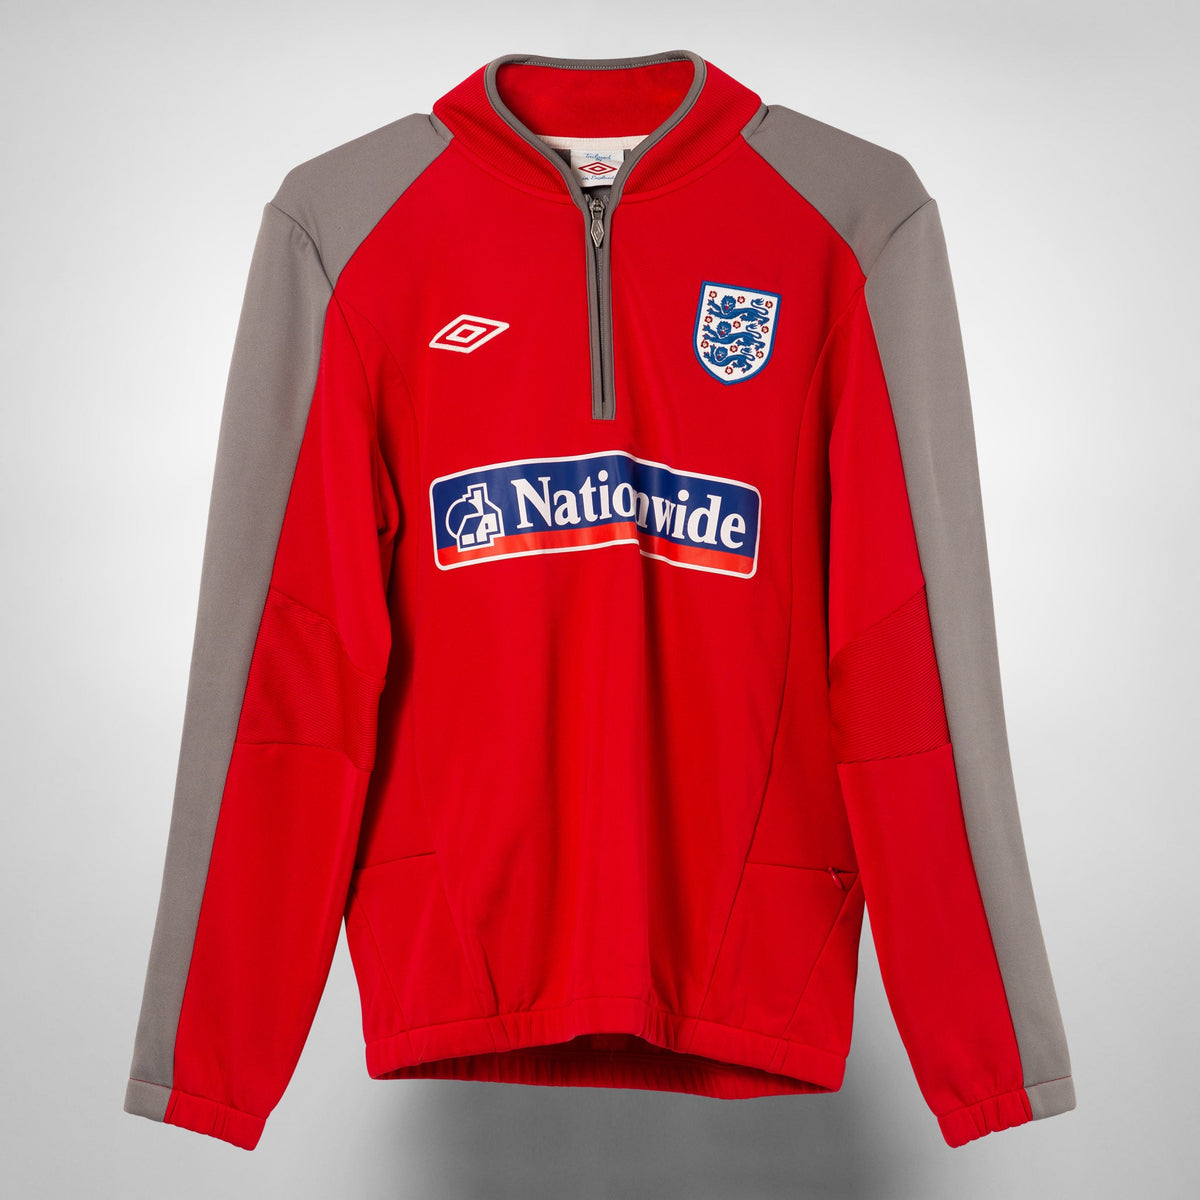 2010 England World Cup Drill Top Jumper Sweatshirt